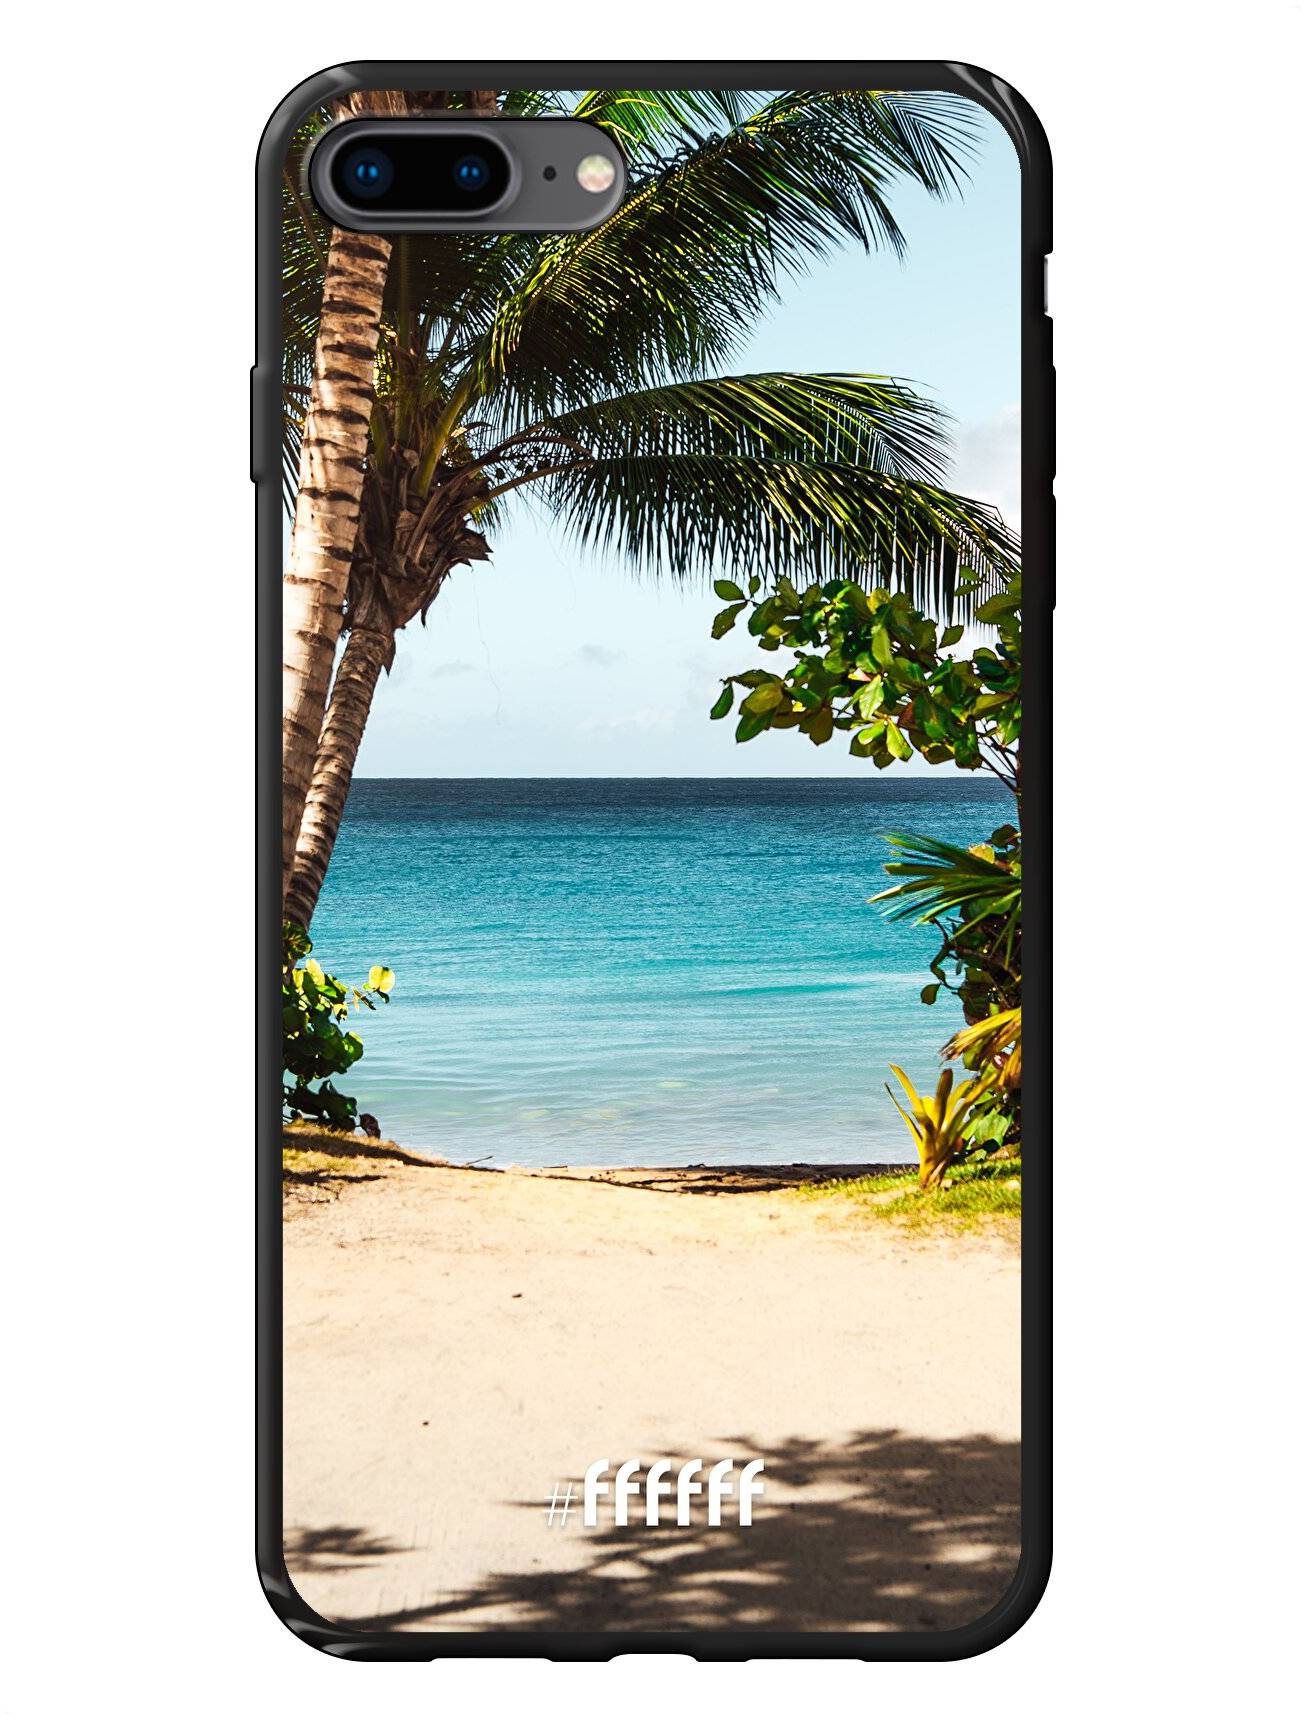 Coconut View iPhone 7 Plus